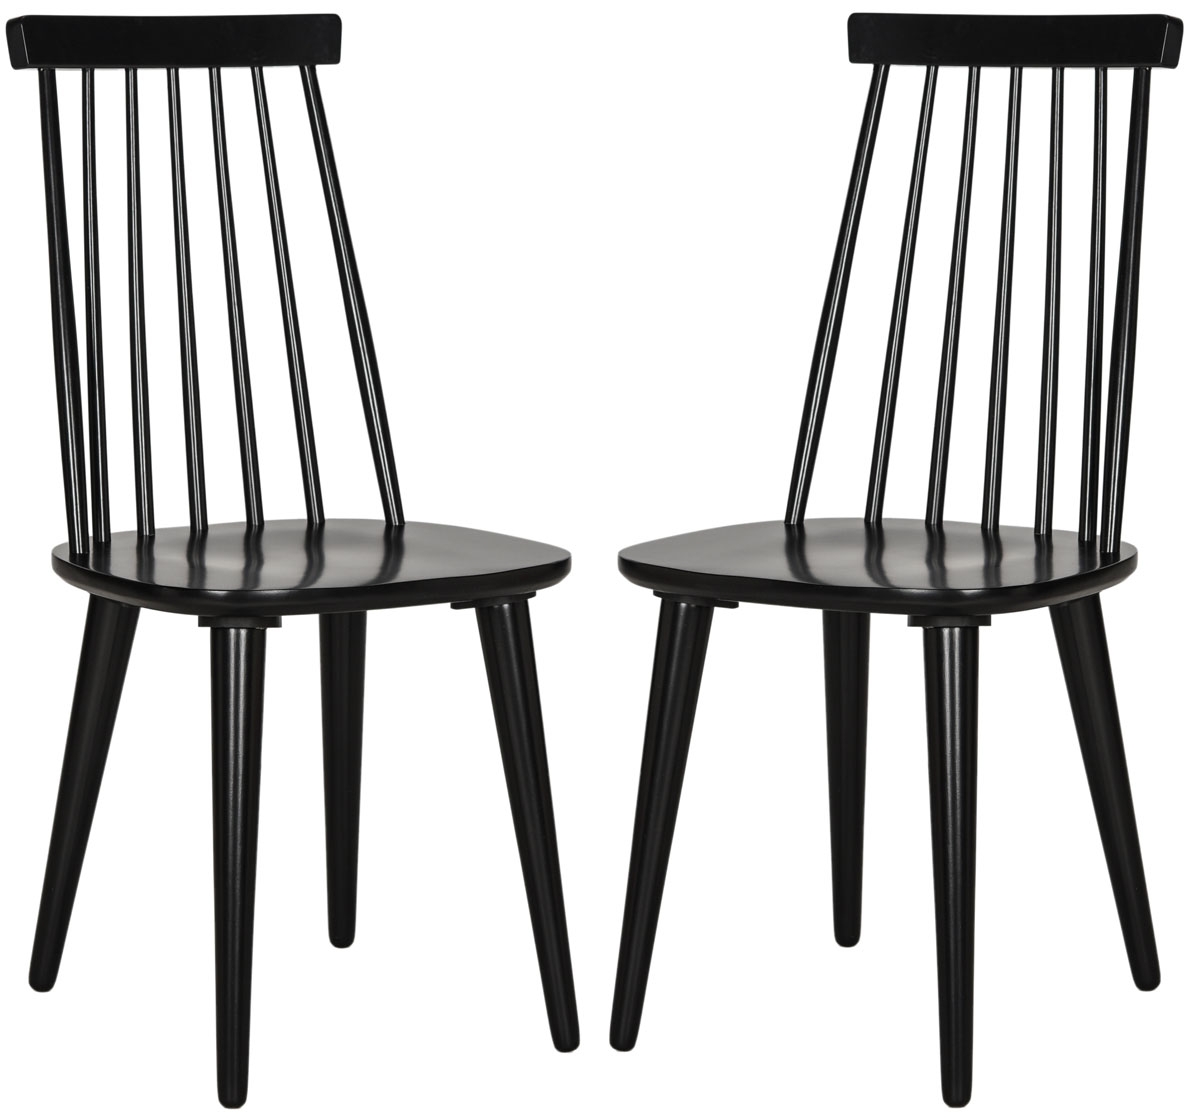 Steffon Spindle Side Chair, Black, Set of 2 - Image 0